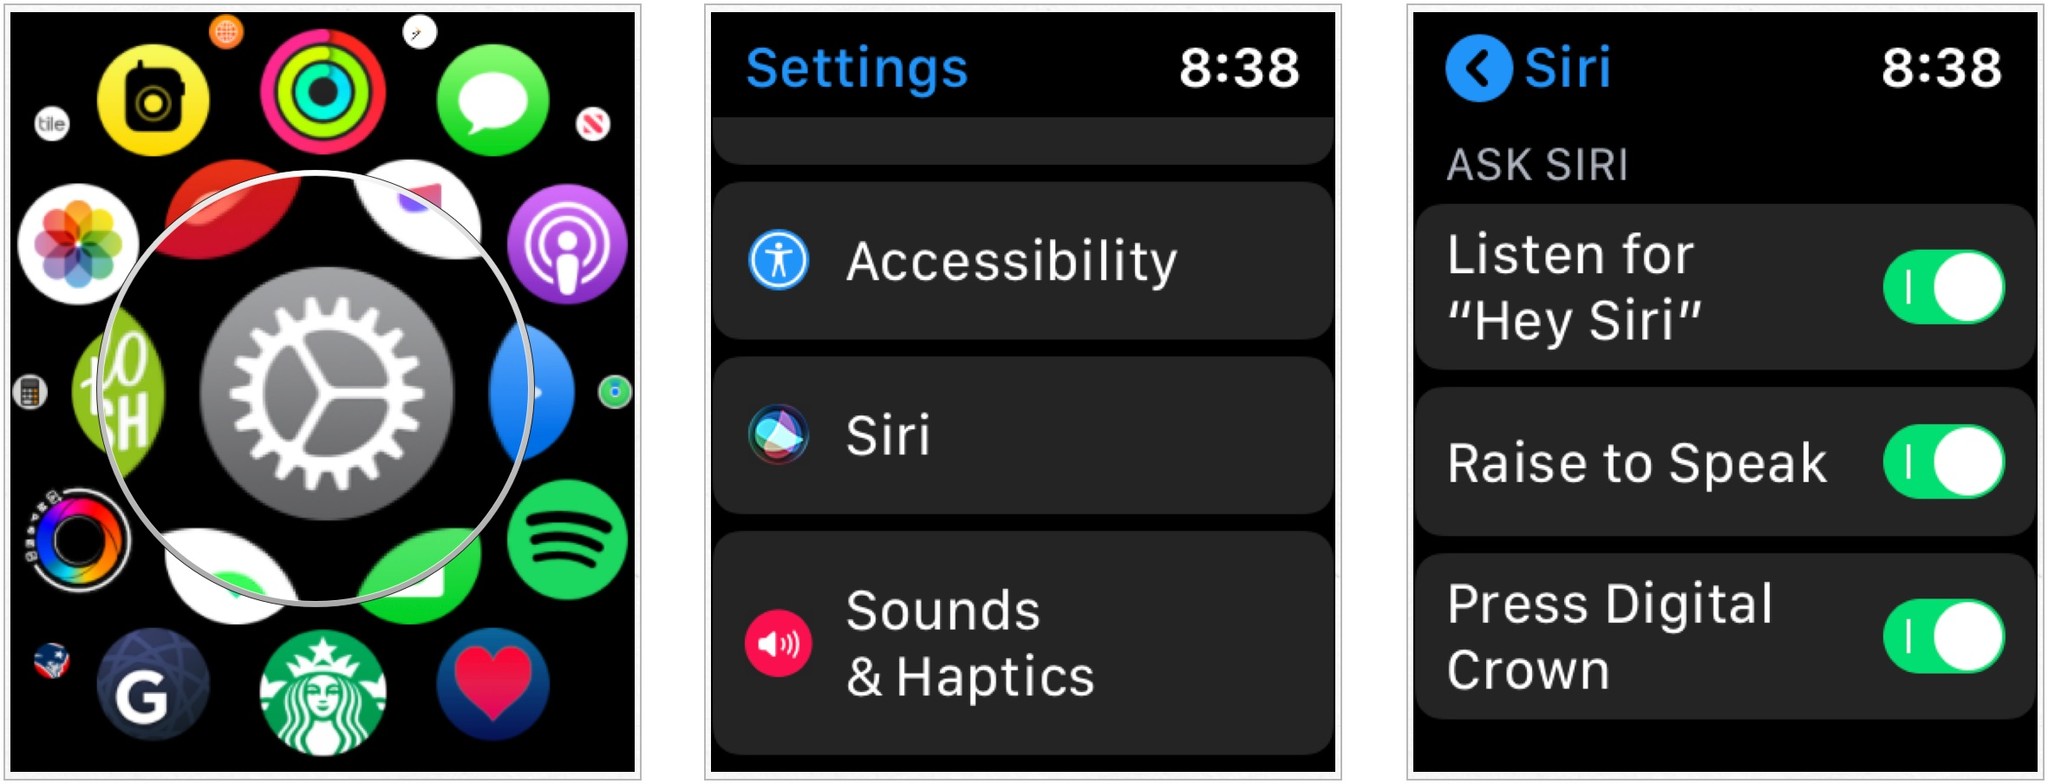 Apple Watch Siri settings